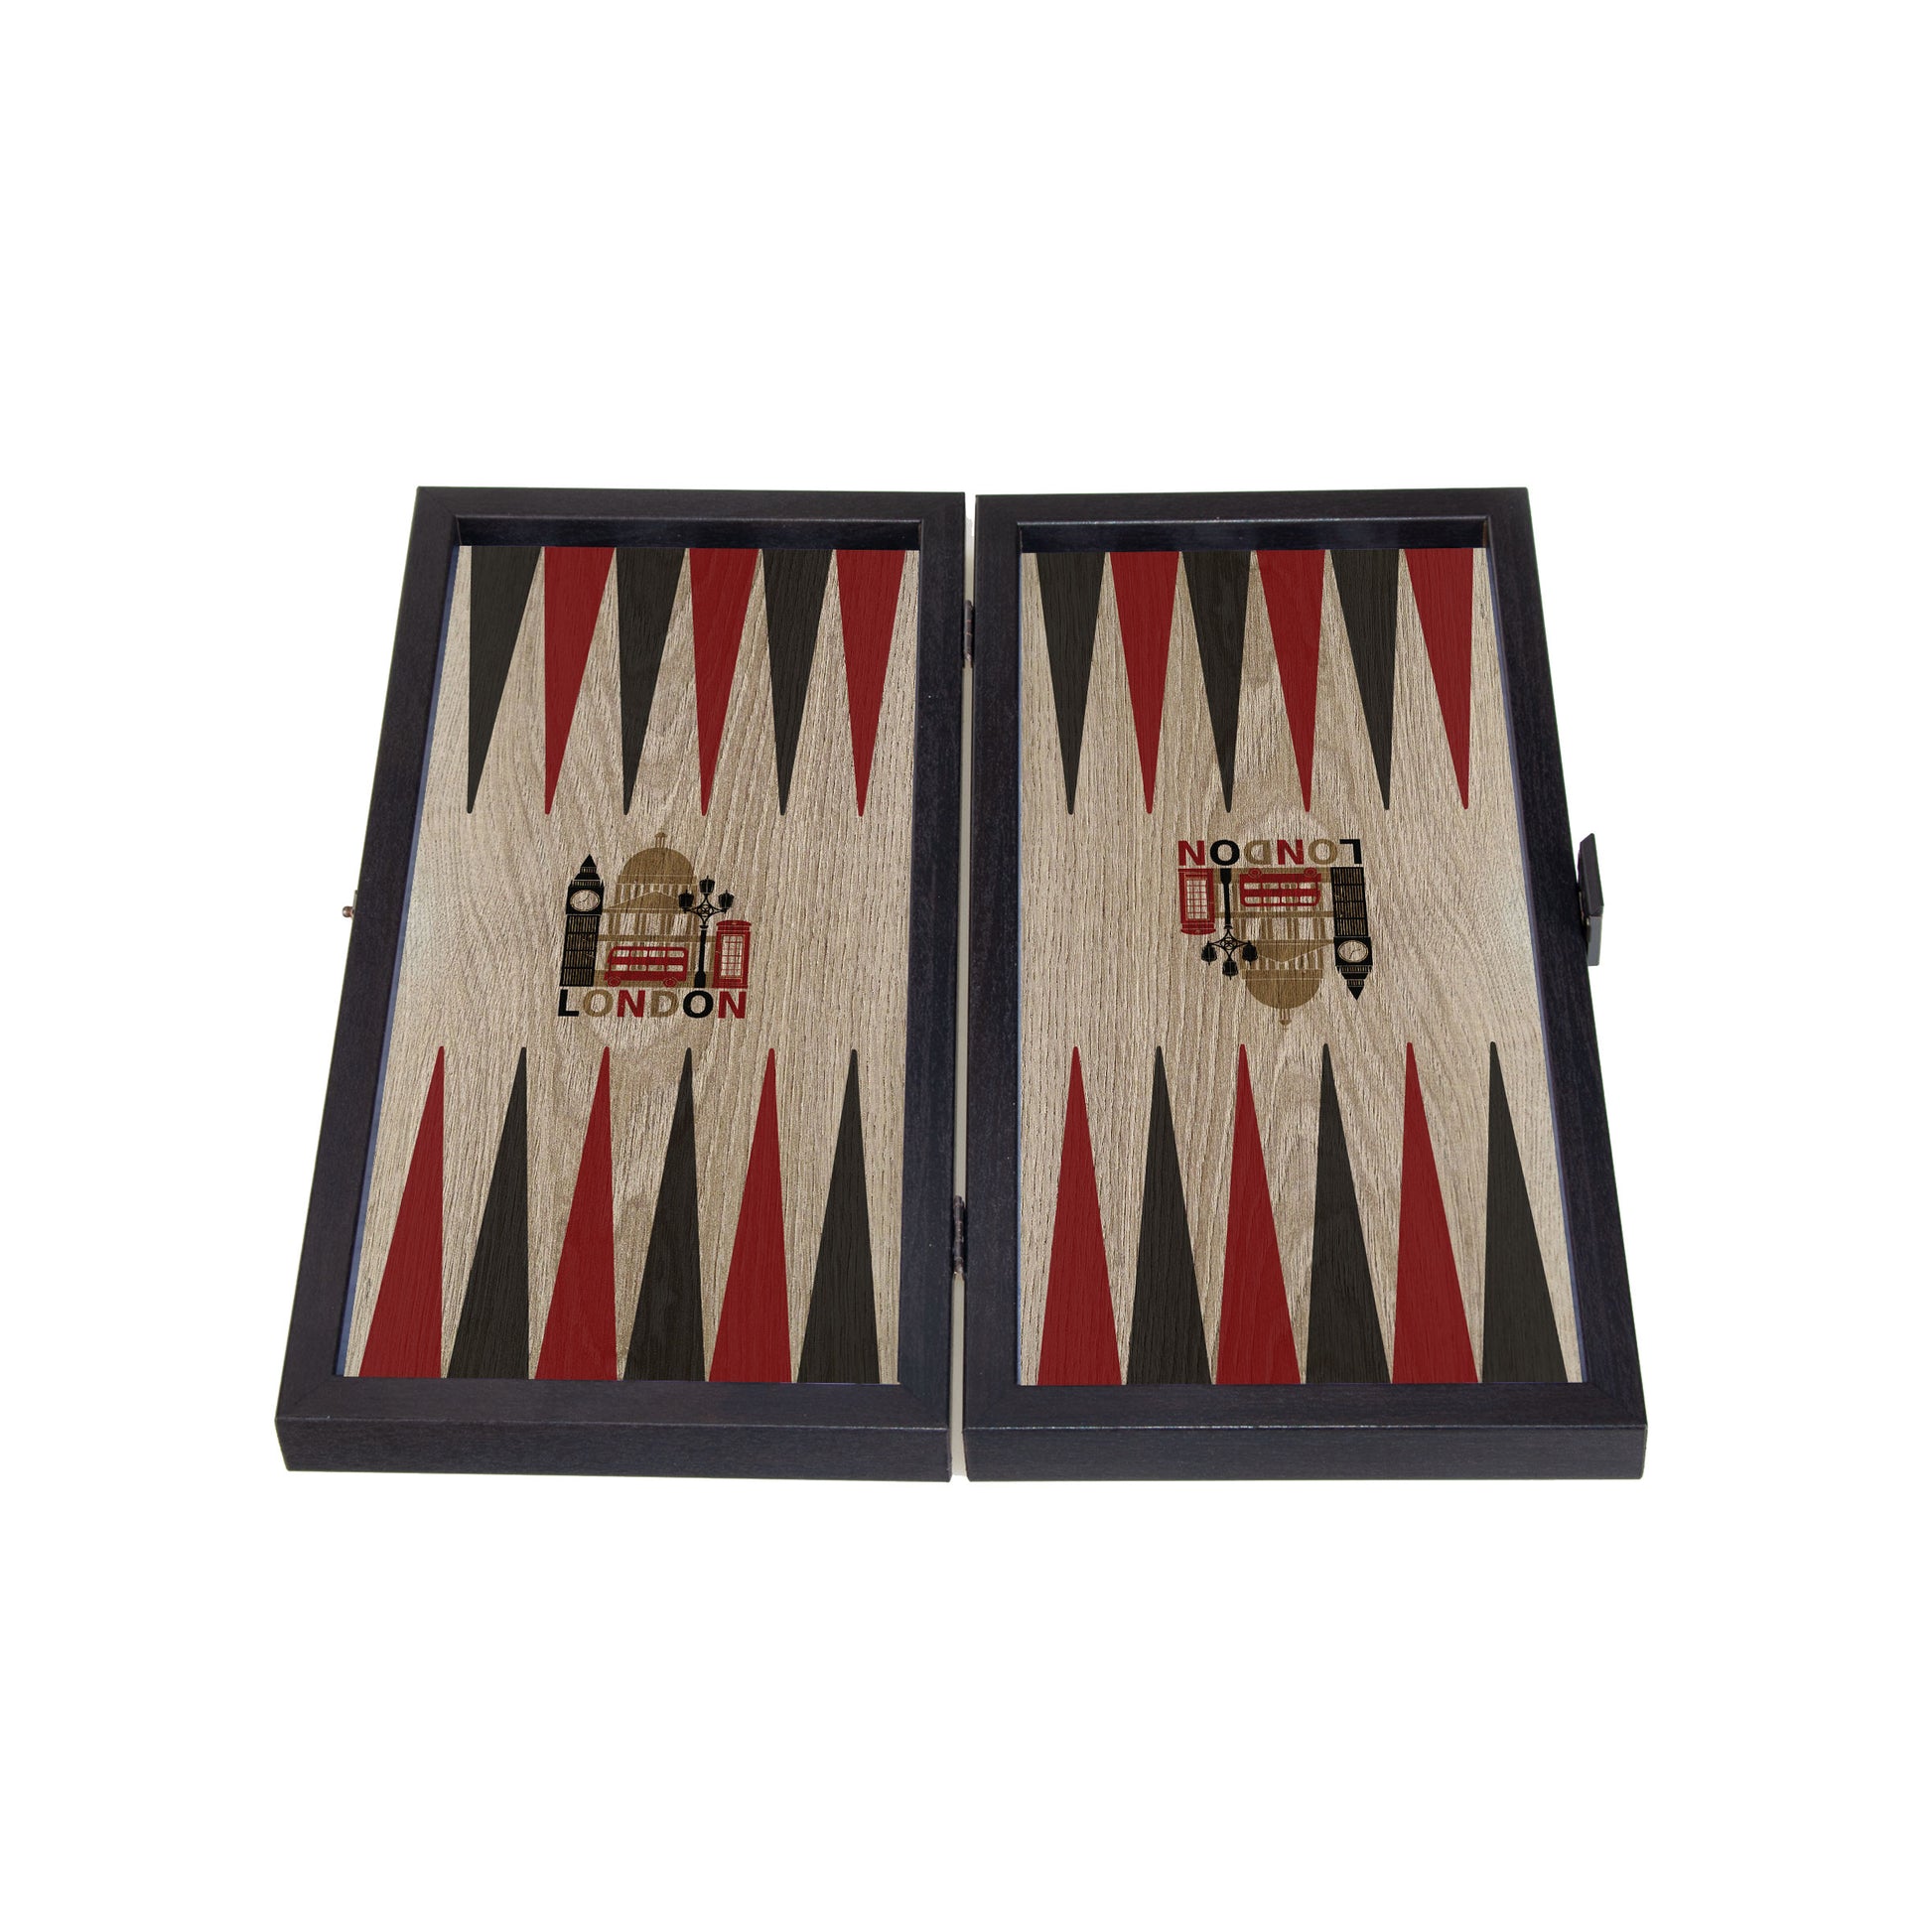 LONDON - Travel Size Backgammon - Premium Backgammon from MANOPOULOS Chess & Backgammon - Just €39! Shop now at MANOPOULOS Chess & Backgammon